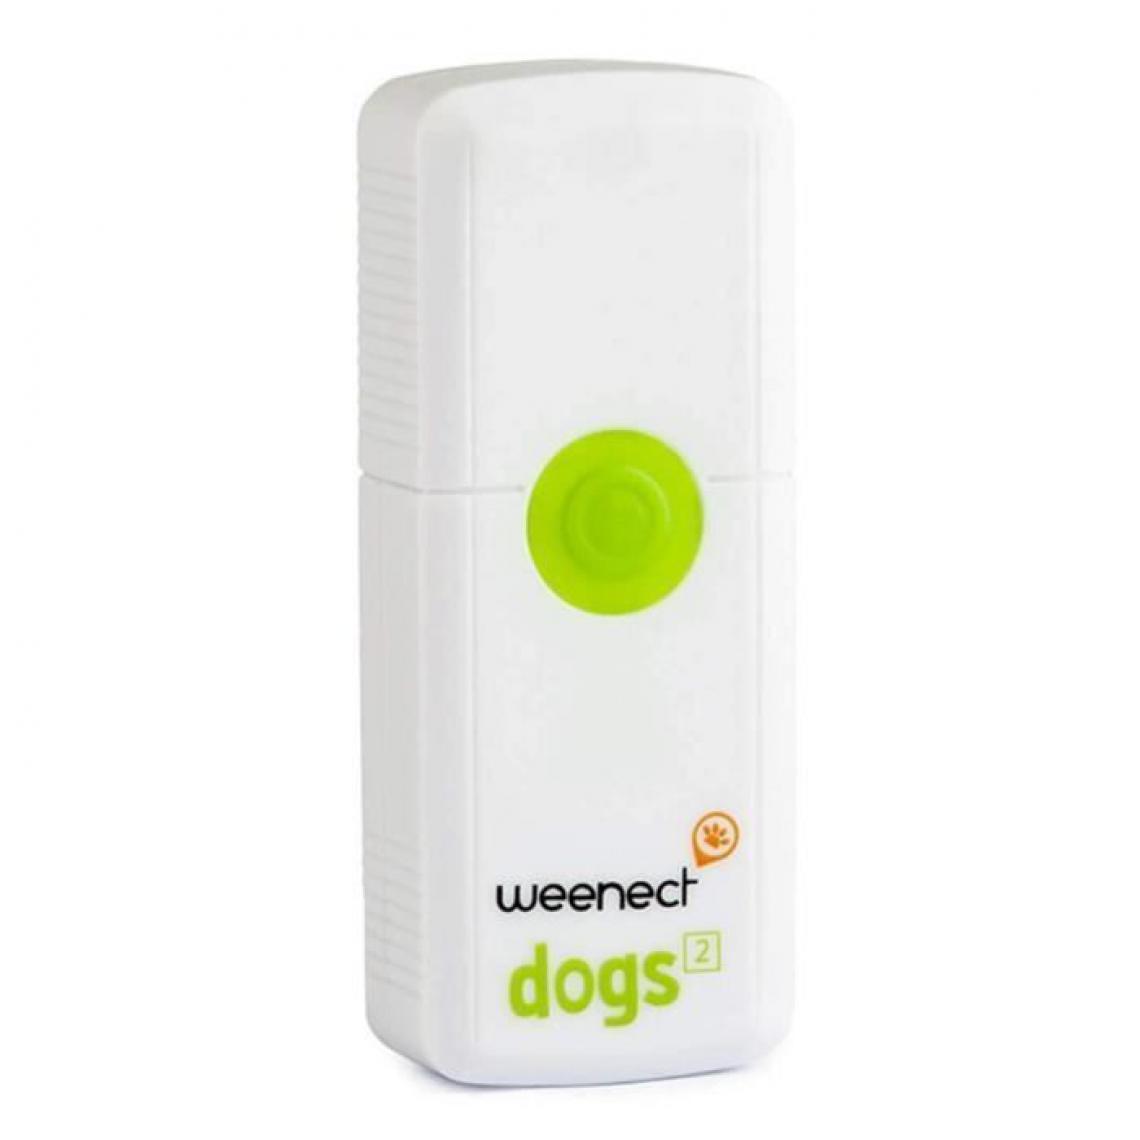 Weenect - WEENECT Dogs 2 - Collier GPS - Pour chien - Accessoires chien de chasse